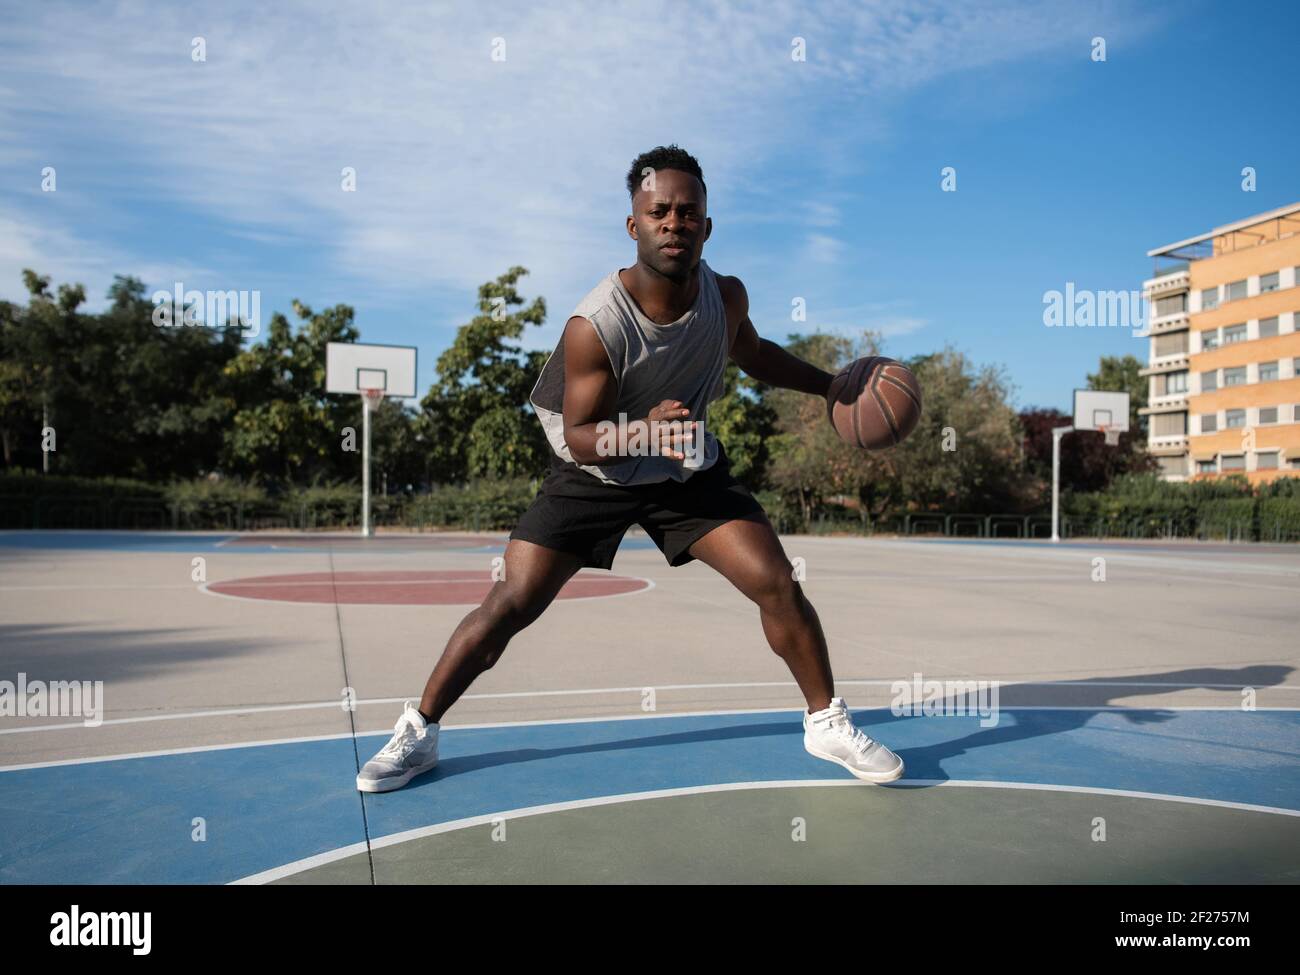 Ballon de basket-ball dribbling de sportif afro-américain Banque D'Images